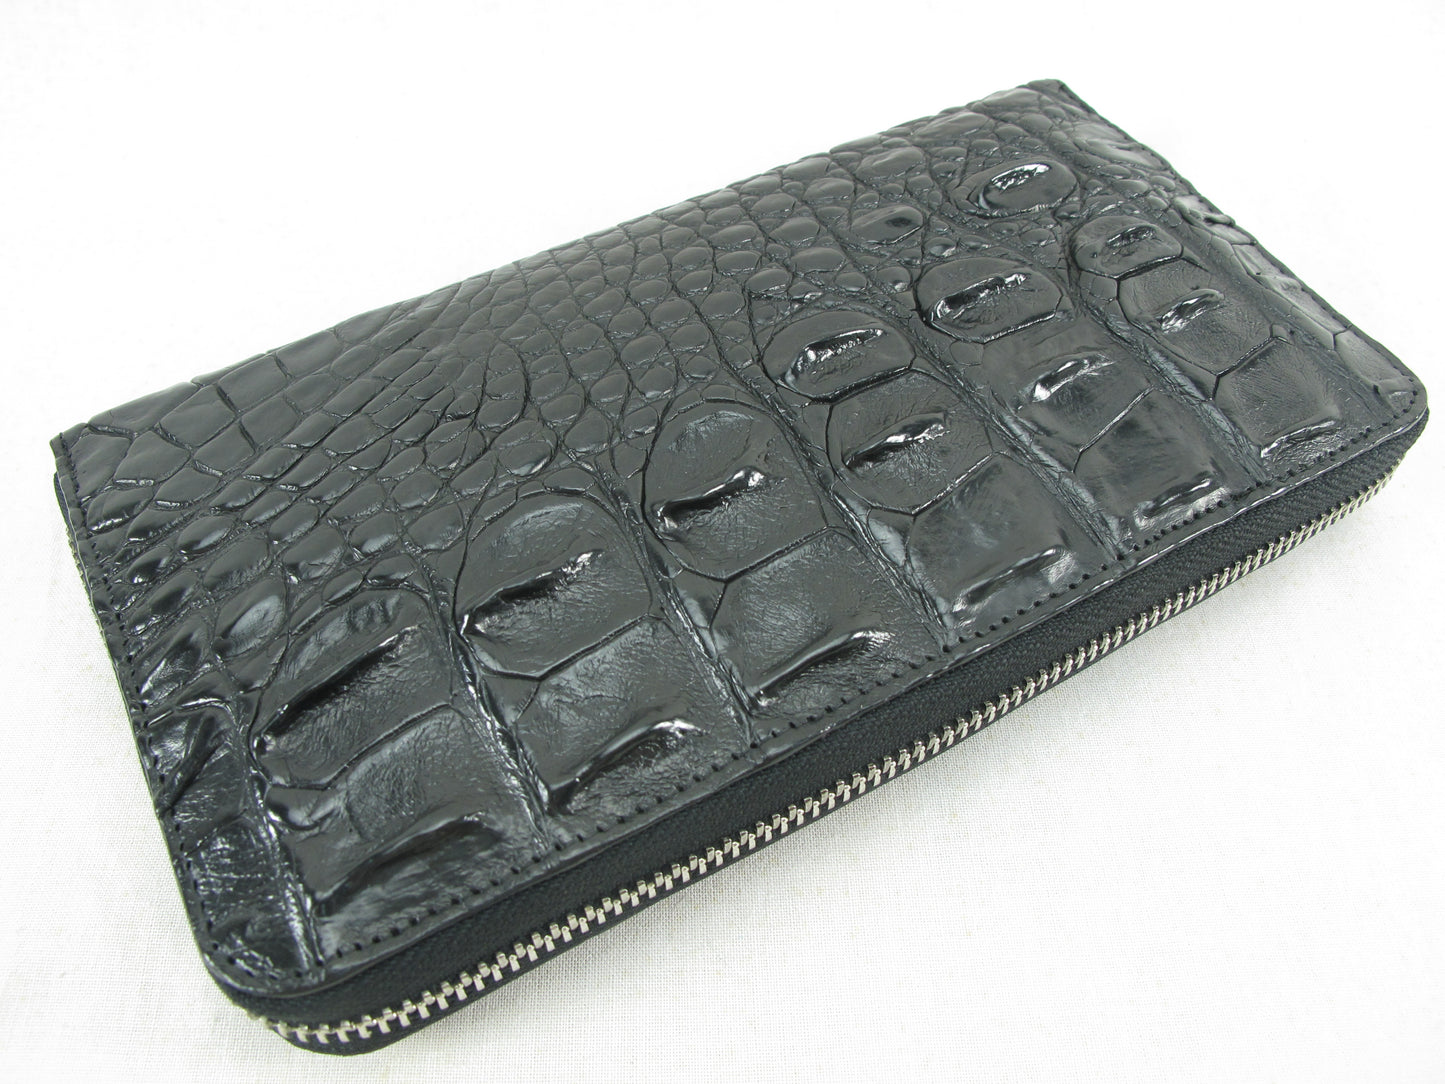 Genuine Crocodile Half Backbone Skin Leather Large Zip Around Clutch Wallet Purse